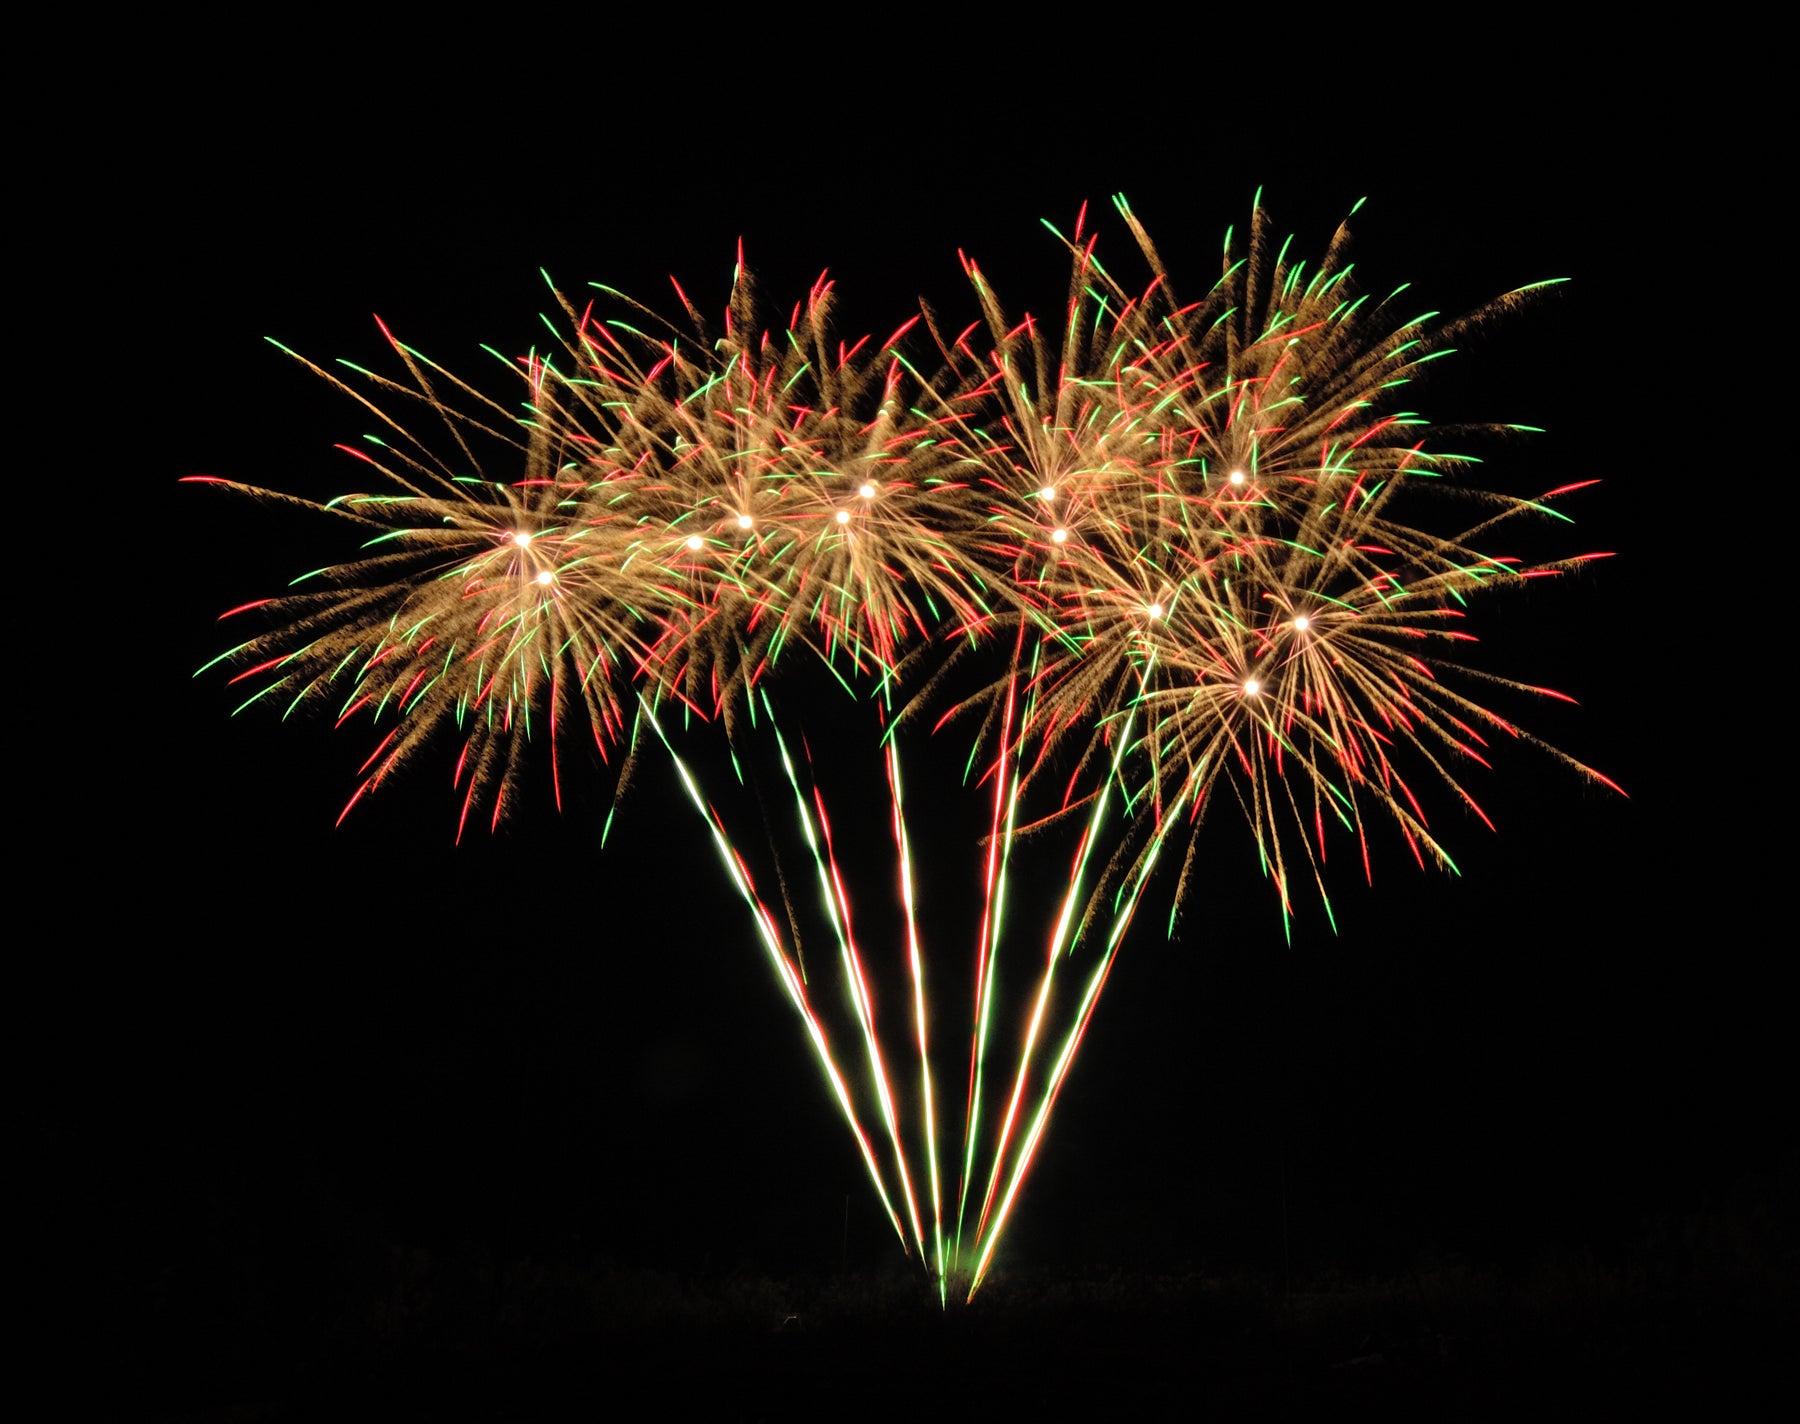 Las Vegas - 9 Fireworks displays simultaneously